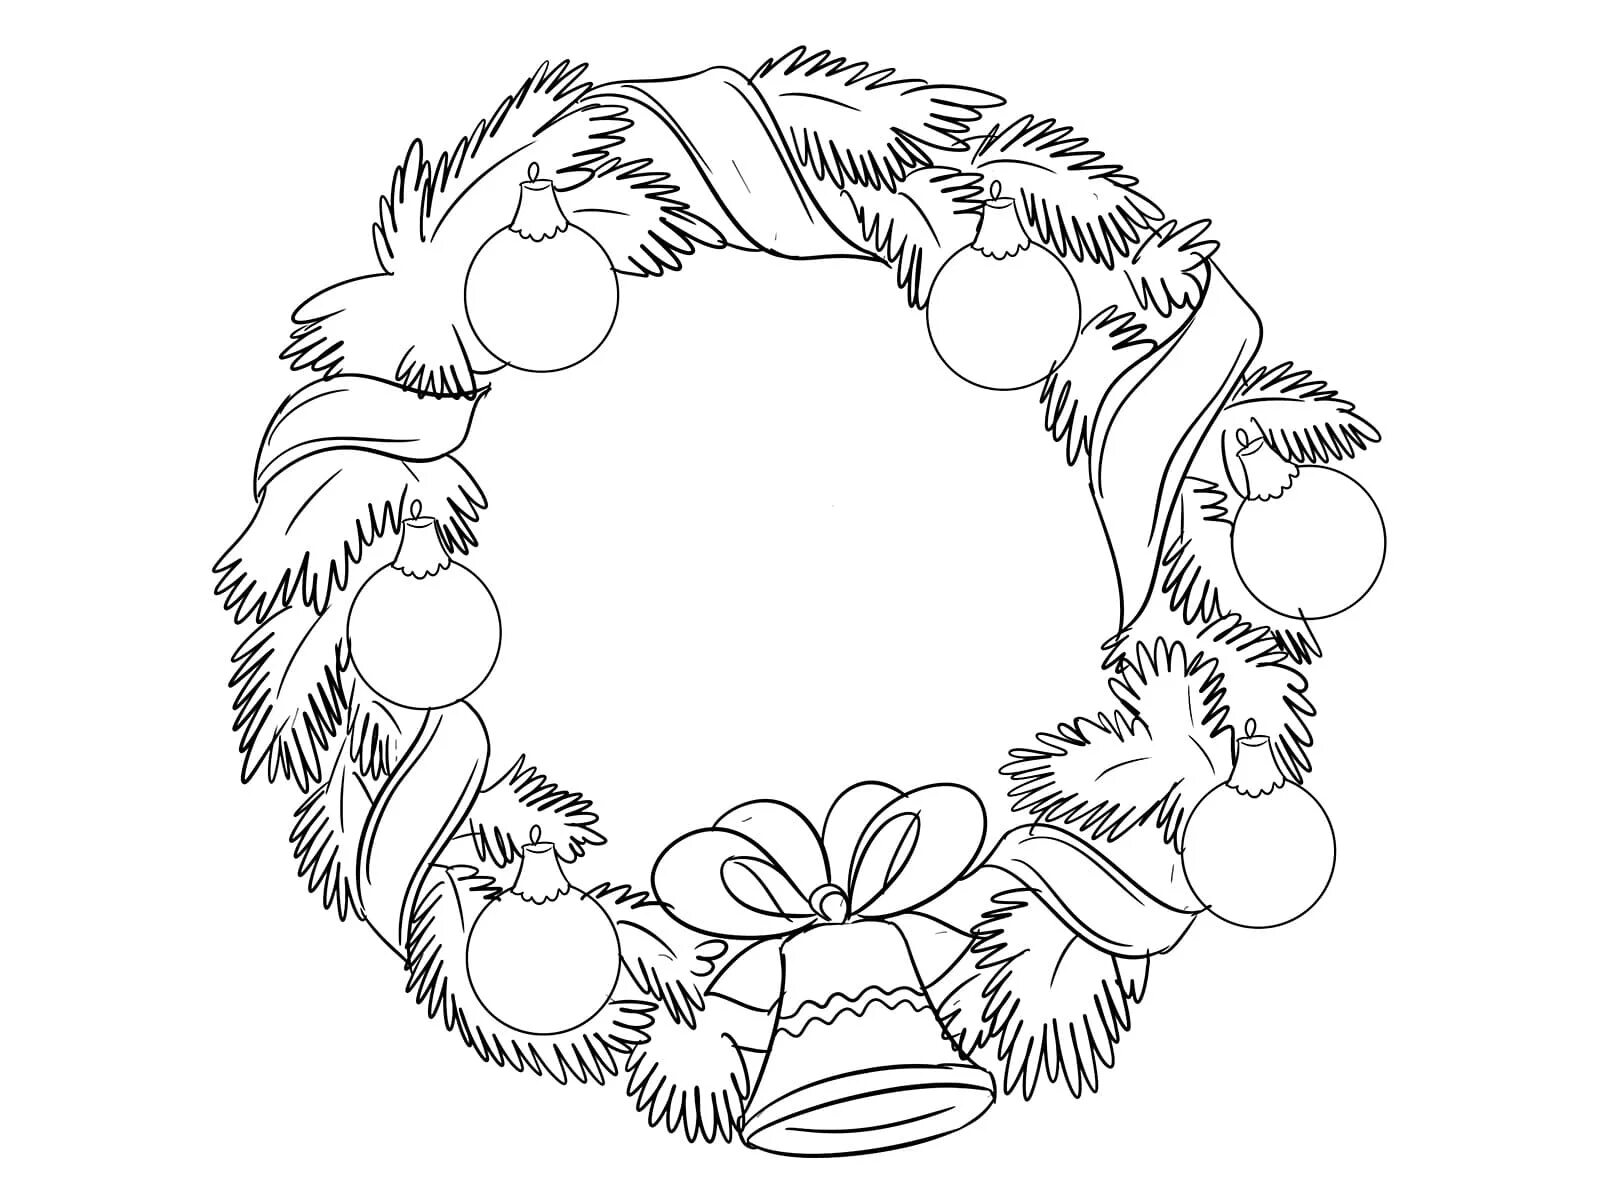 Children's Christmas wreath #7